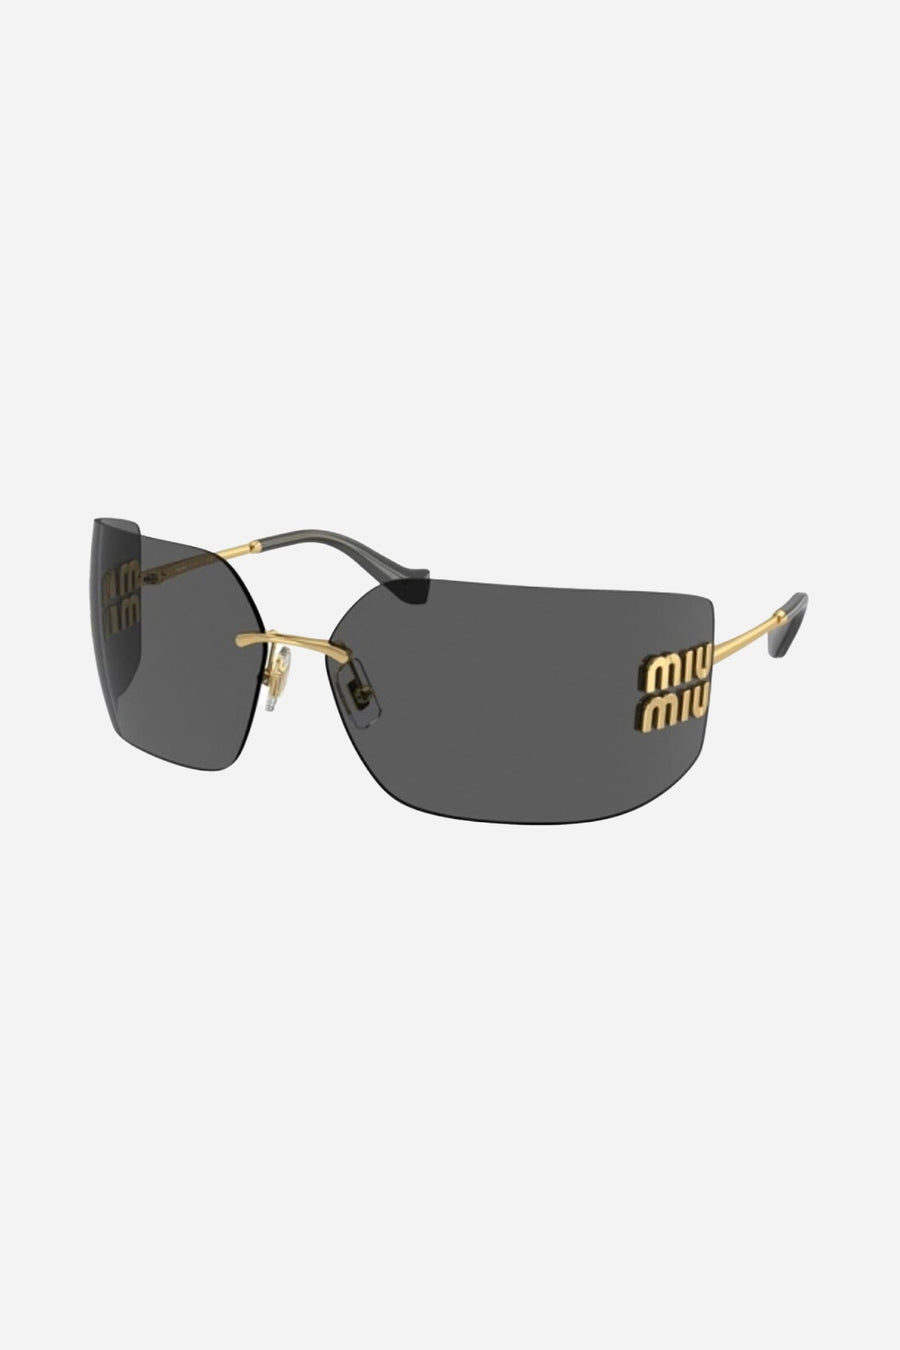 Miu Miu squared metal sunglasses with gold details